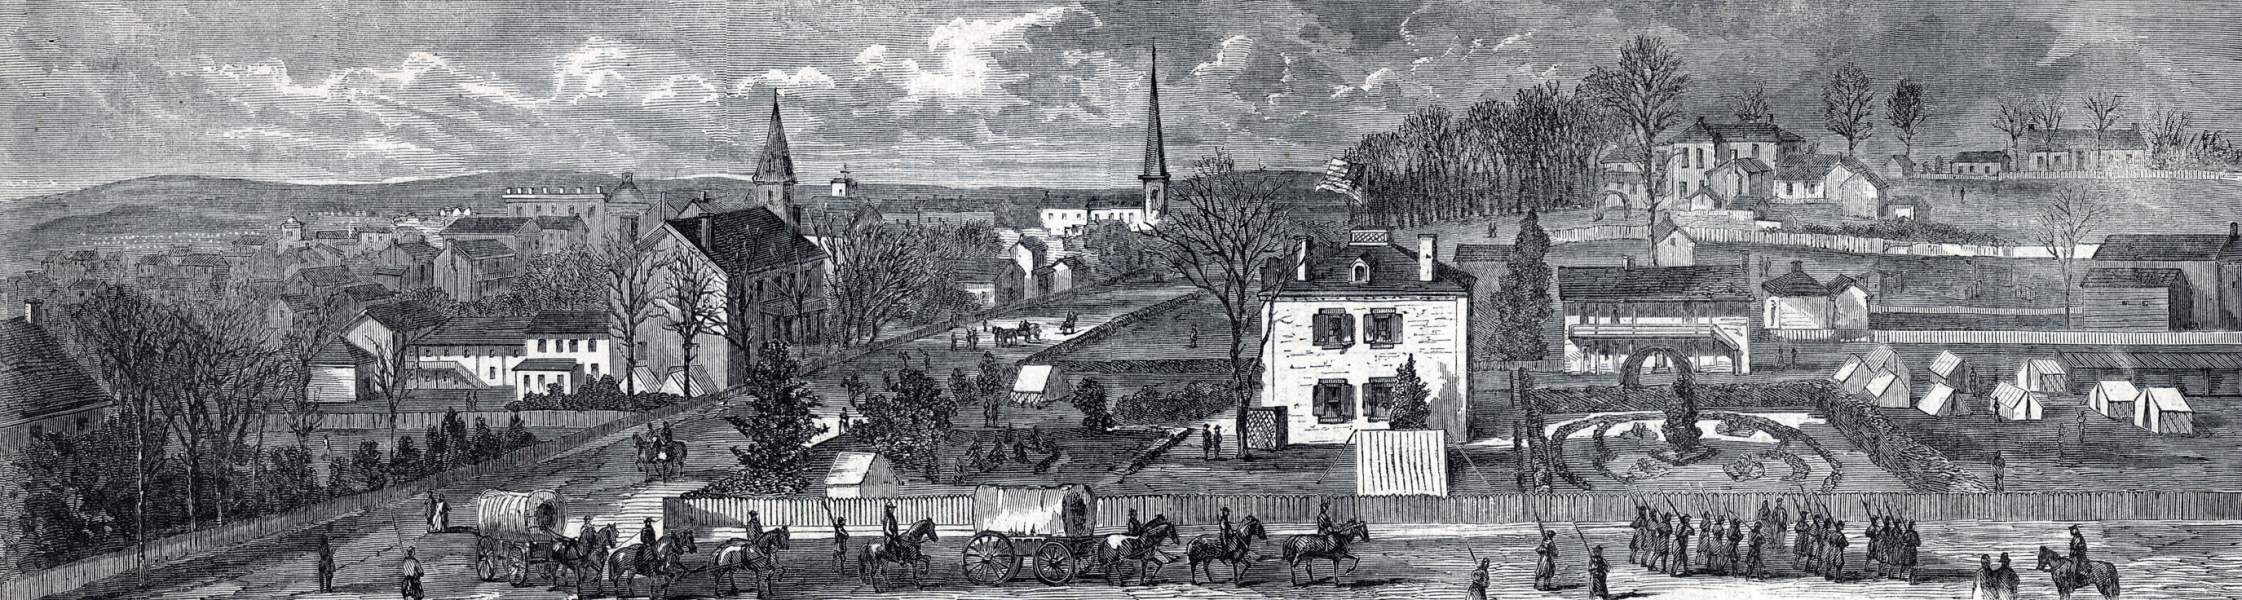 Huntsville, Alabama, 1864, artist's impression, zoomable image